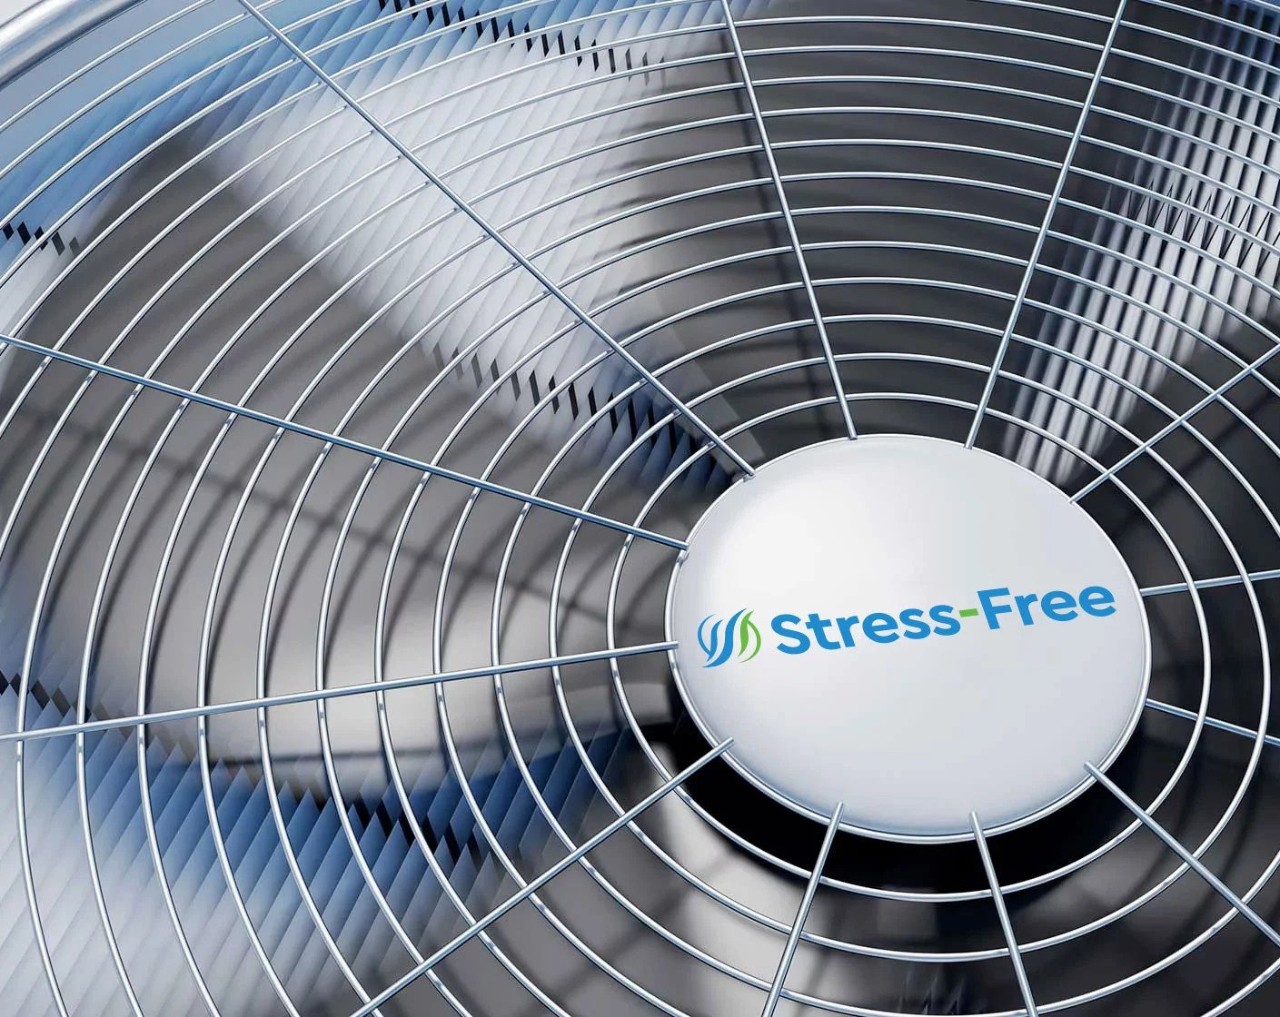 Fan with Stress free logo